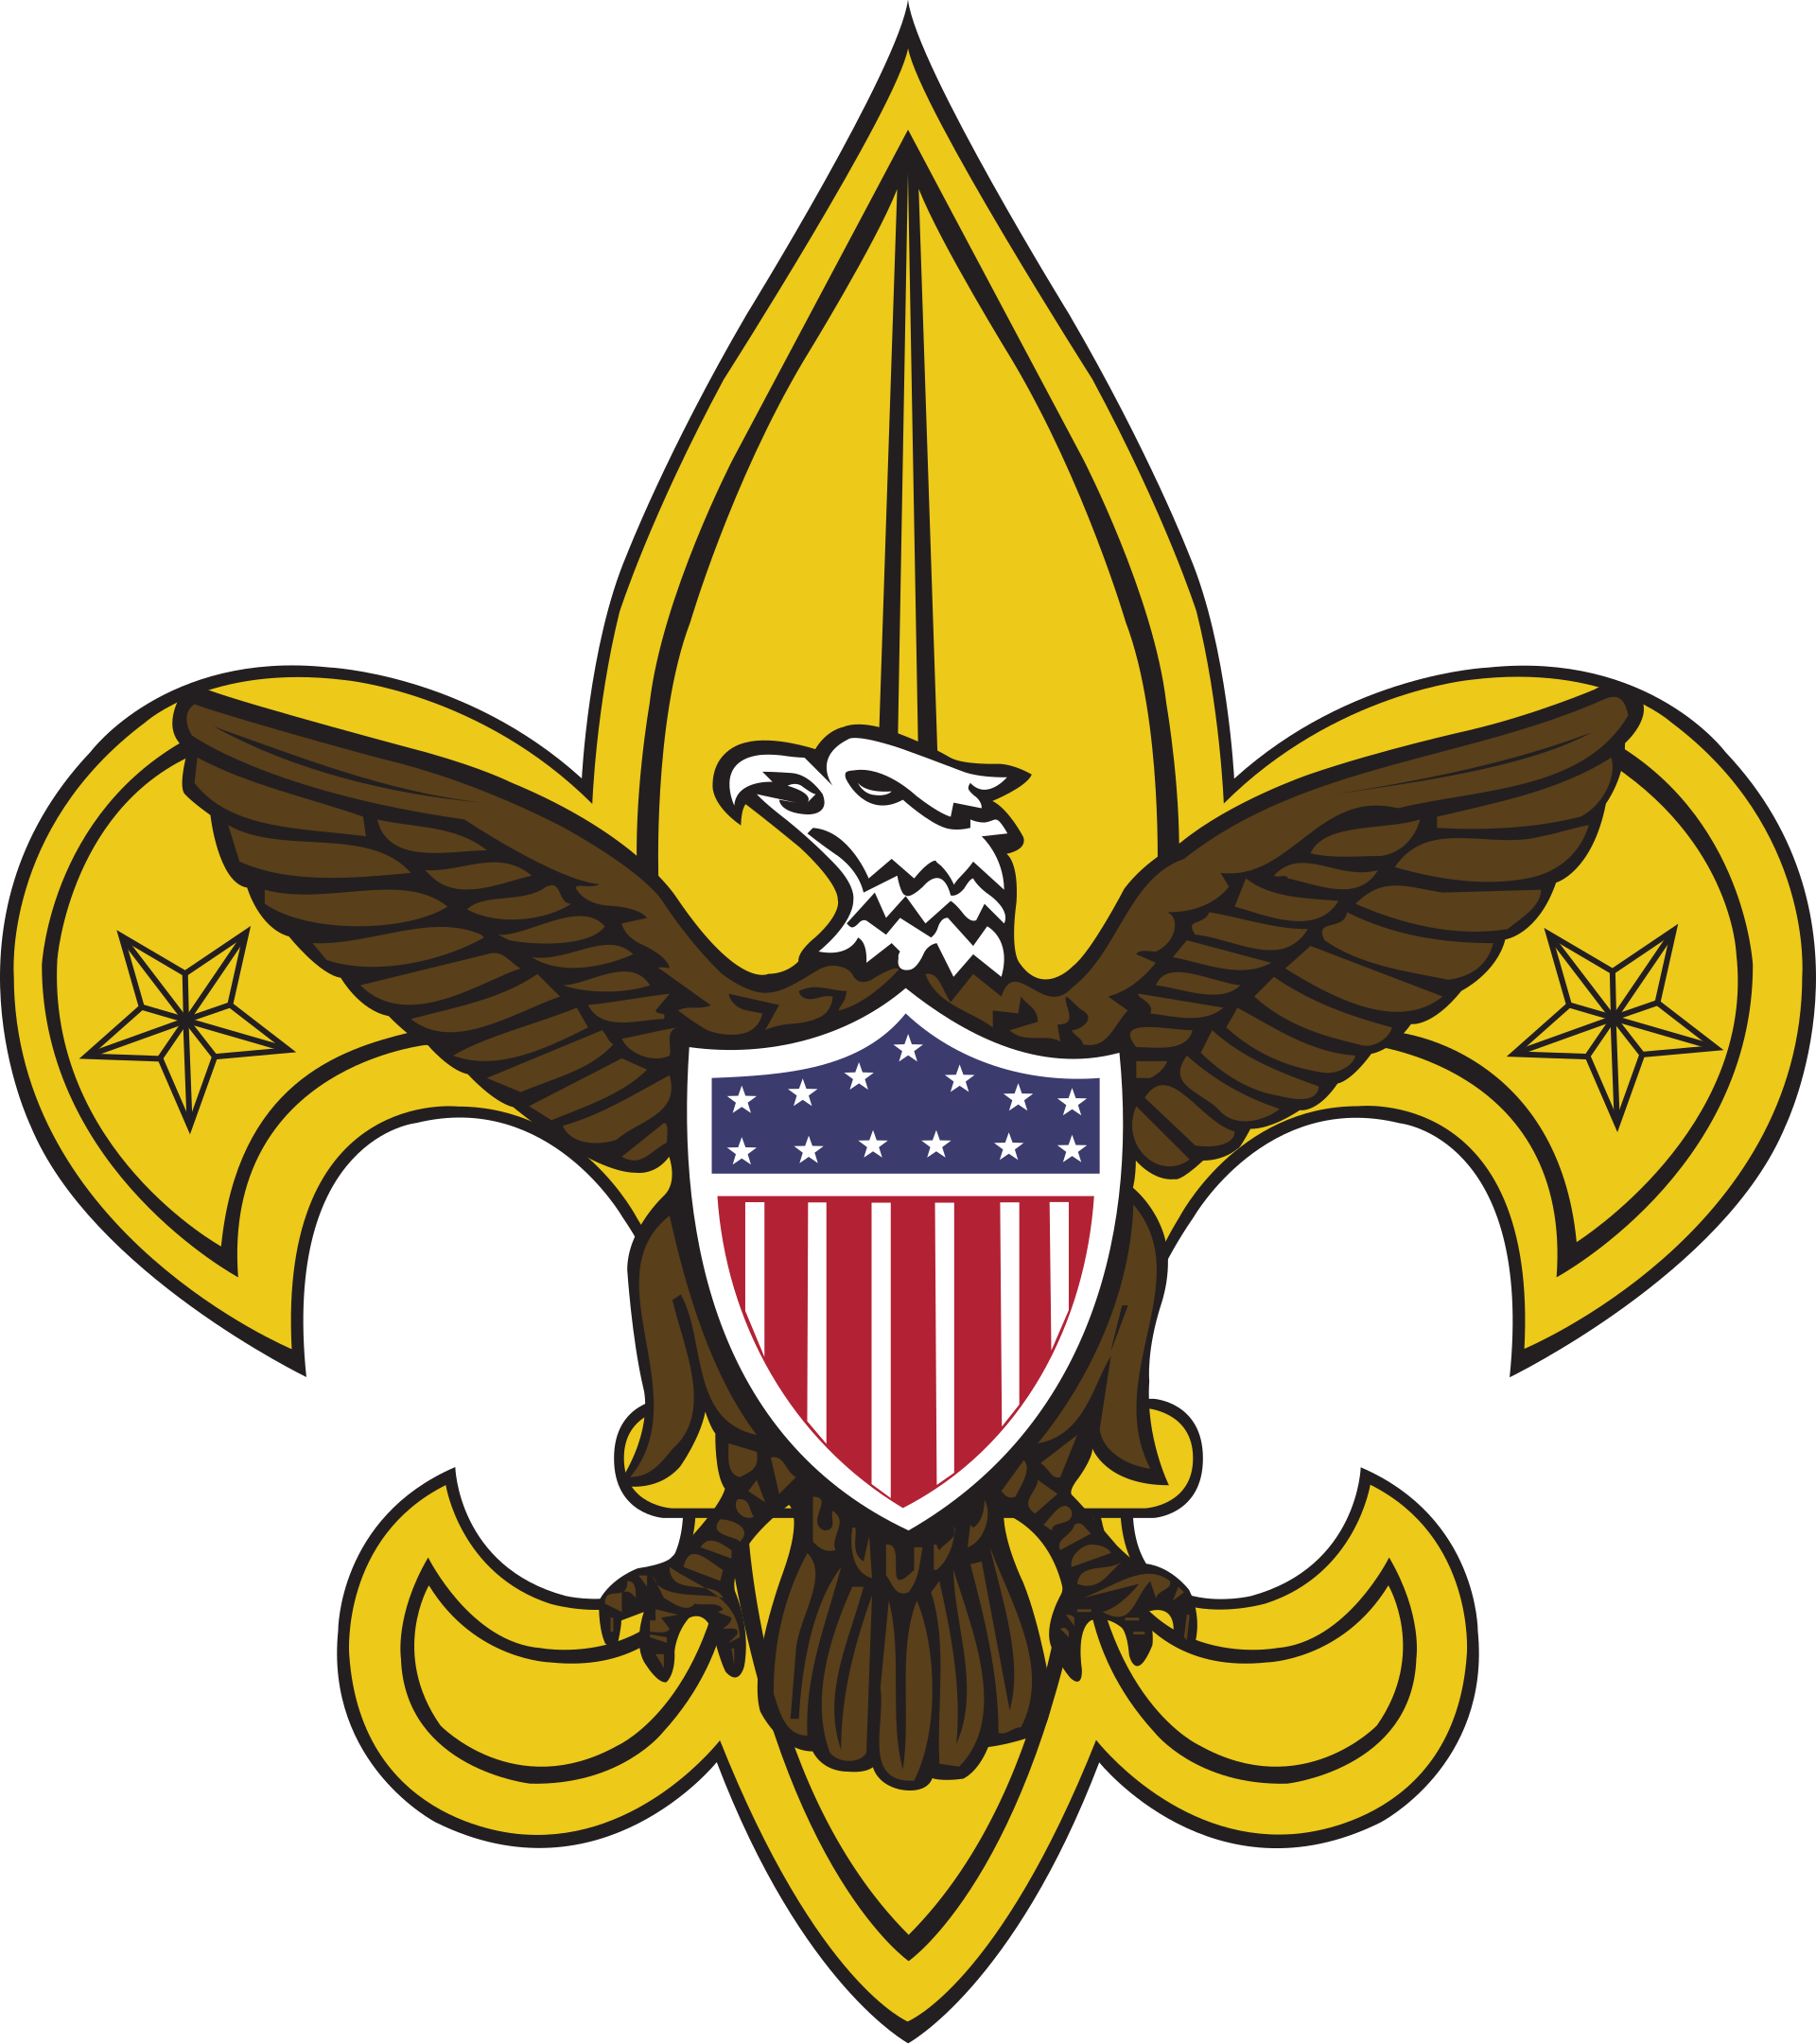 Boy Scouting (Boy Scouts of America) - Wikipedia